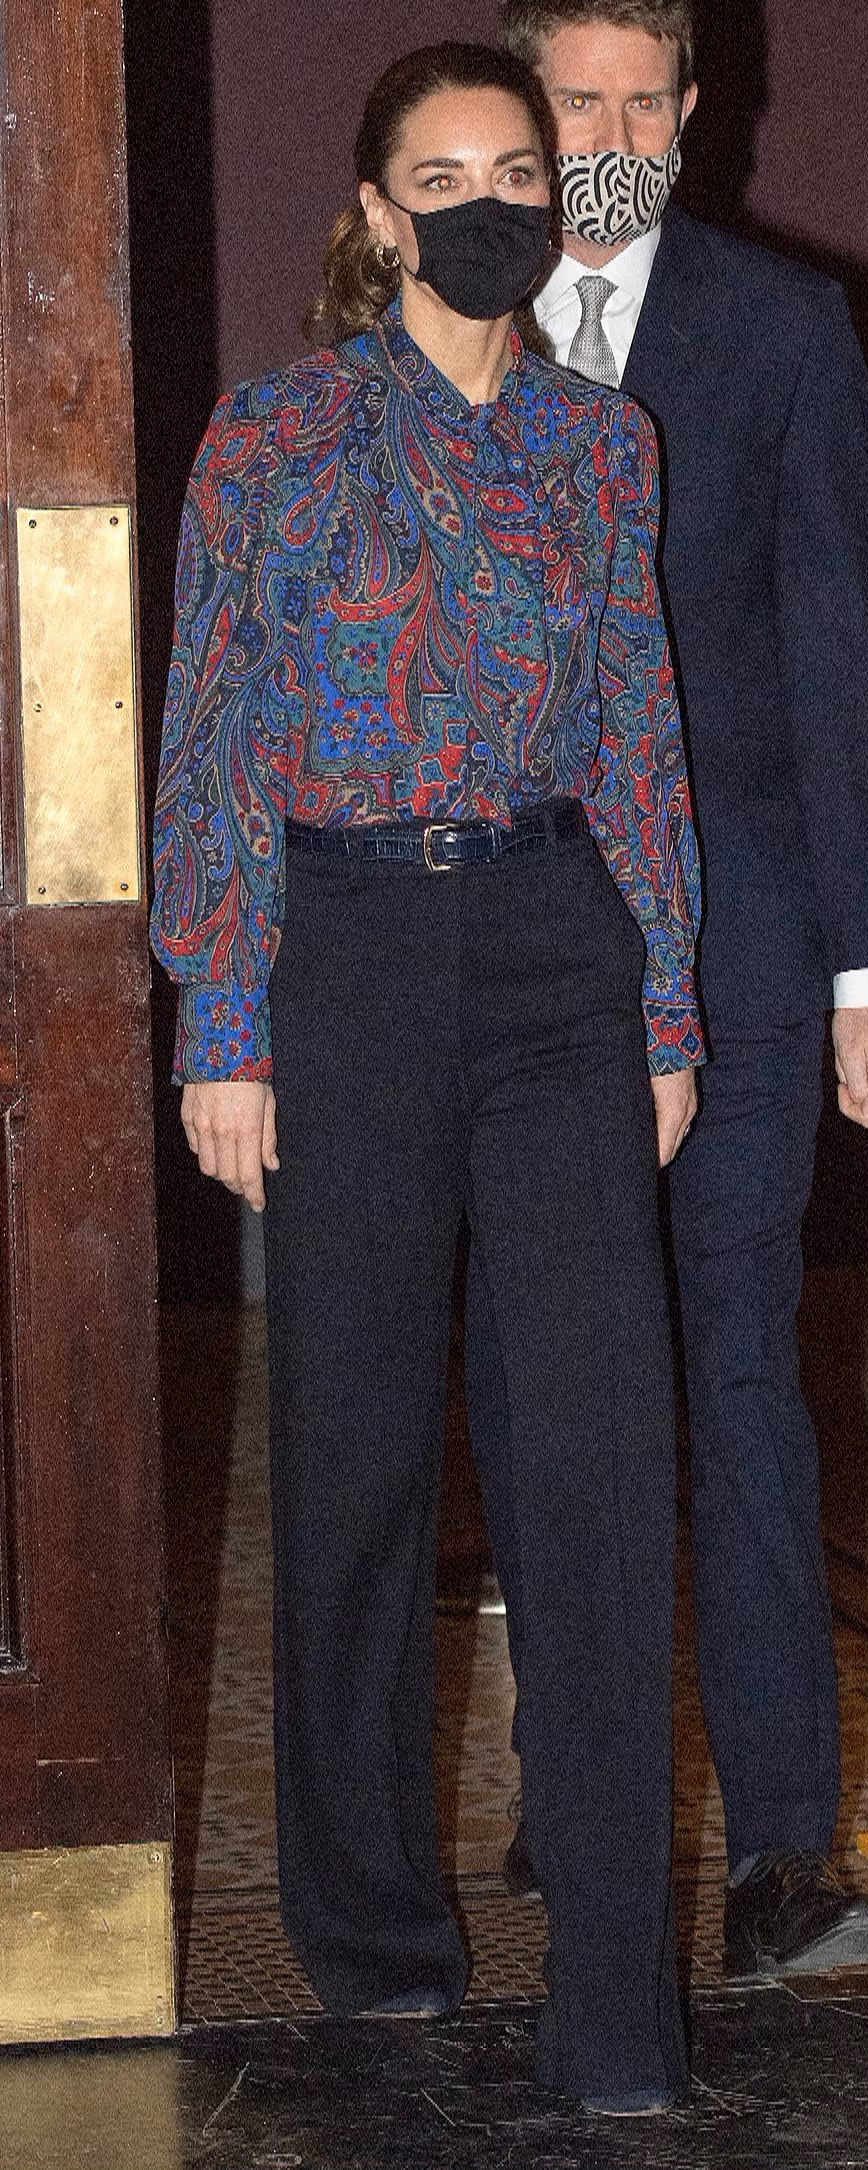 Sézane Bruna Hoop Earrings in Gold as seen on Kate Middleton, The Duchess of Cambridge.